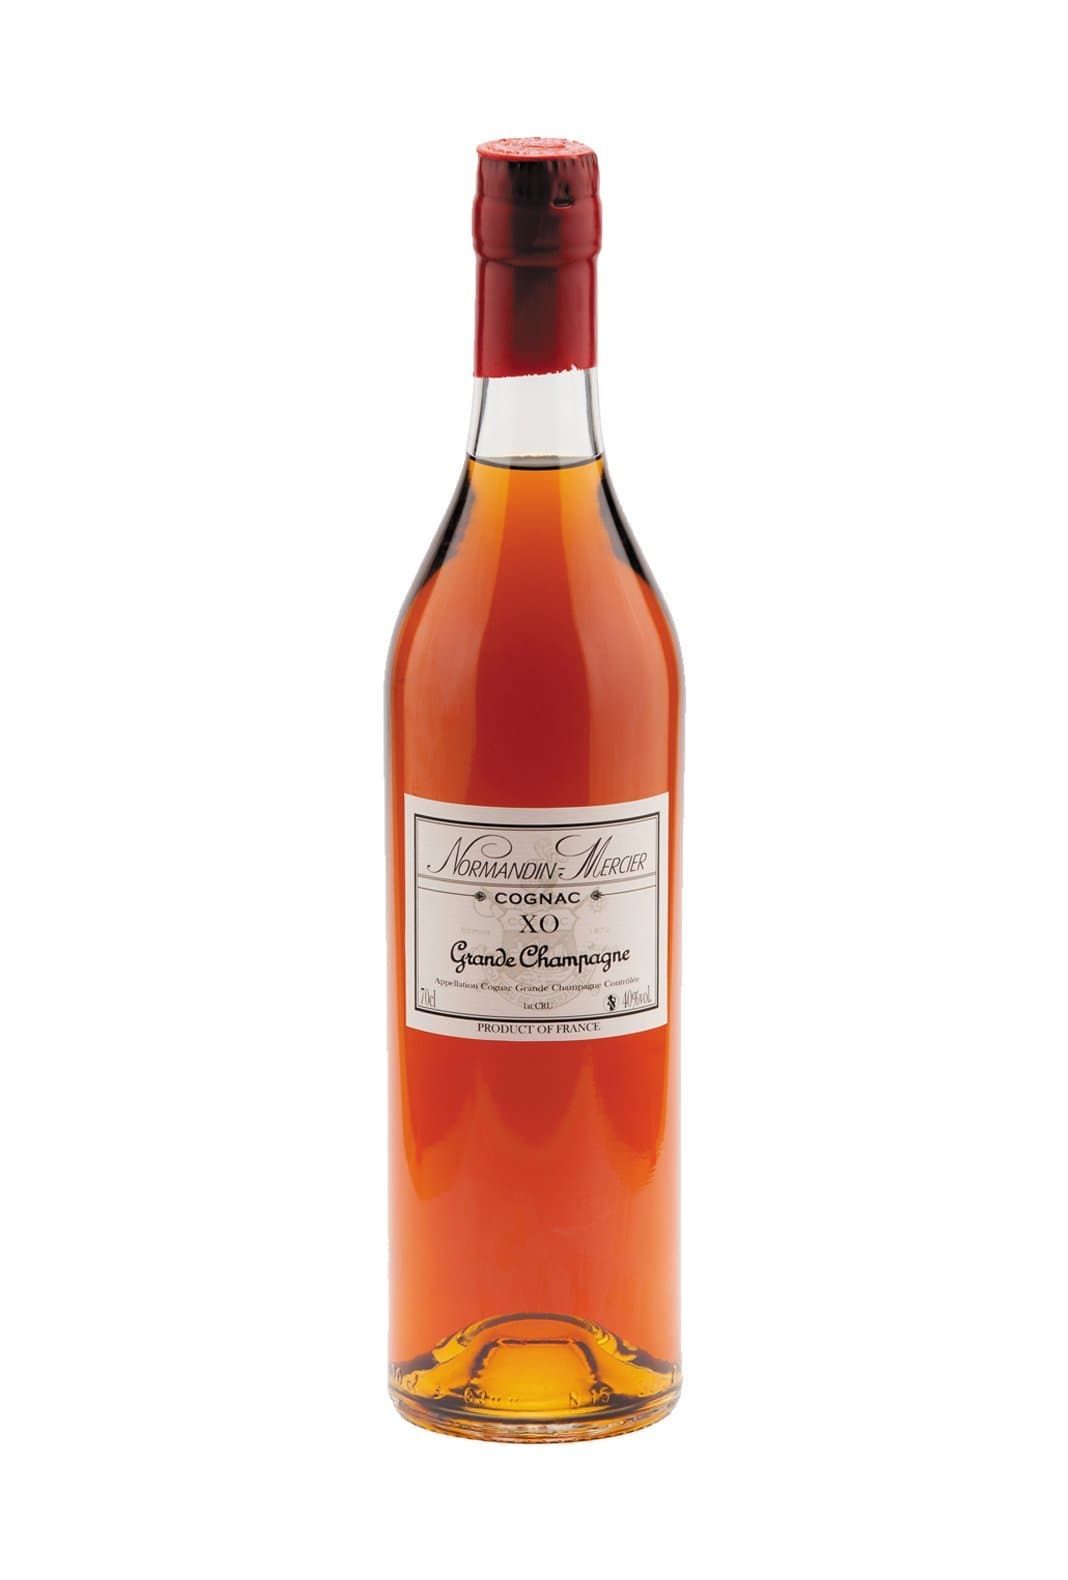 Normandin-Mercier Cognac XO 30 years Grande Champagne 40% 700ml | Brandy | Shop online at Spirits of France